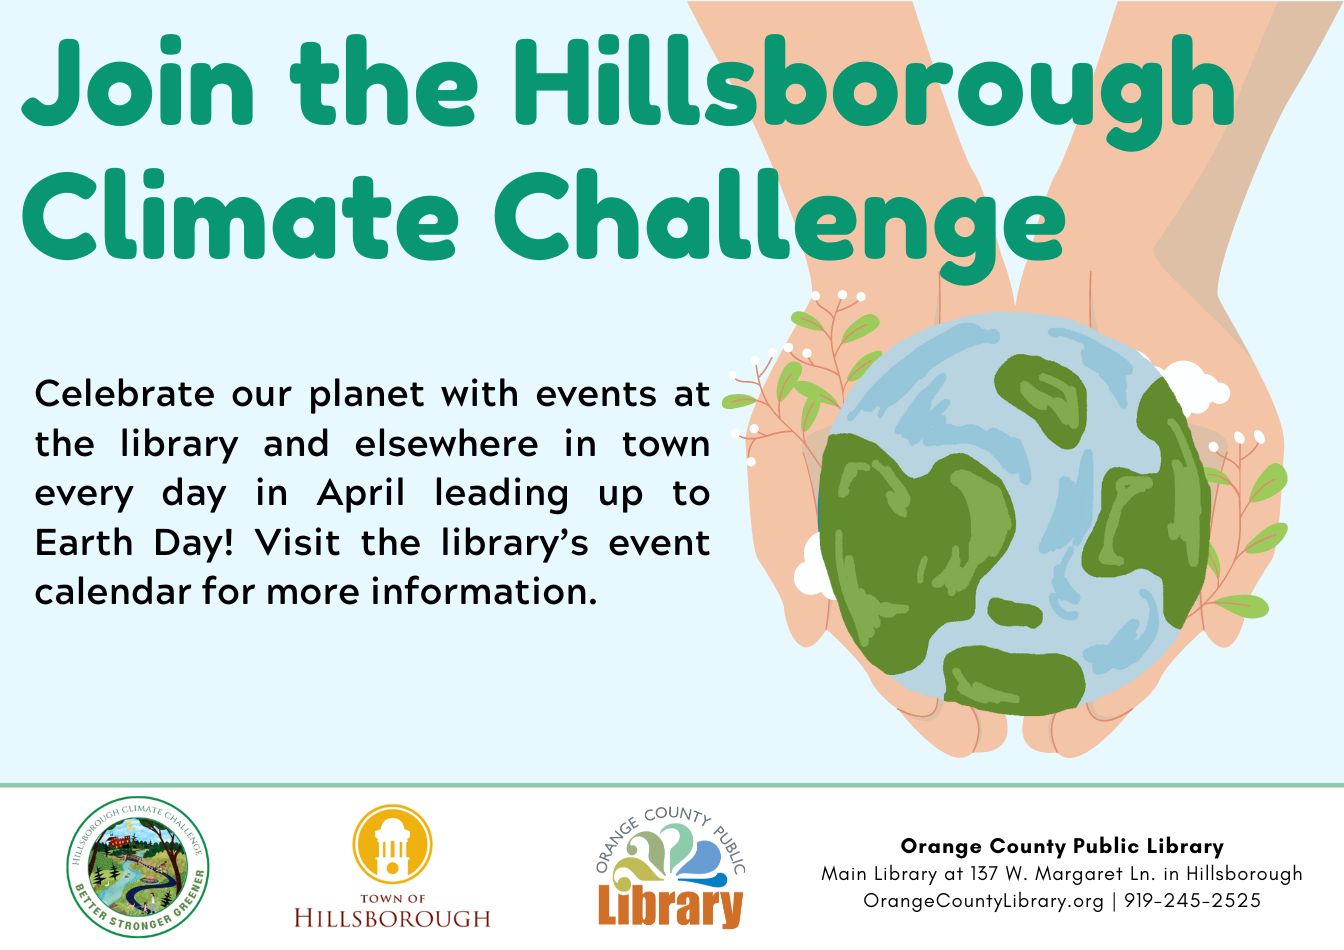 Hillsborough Climate Challenge Book Discussion via Zoom